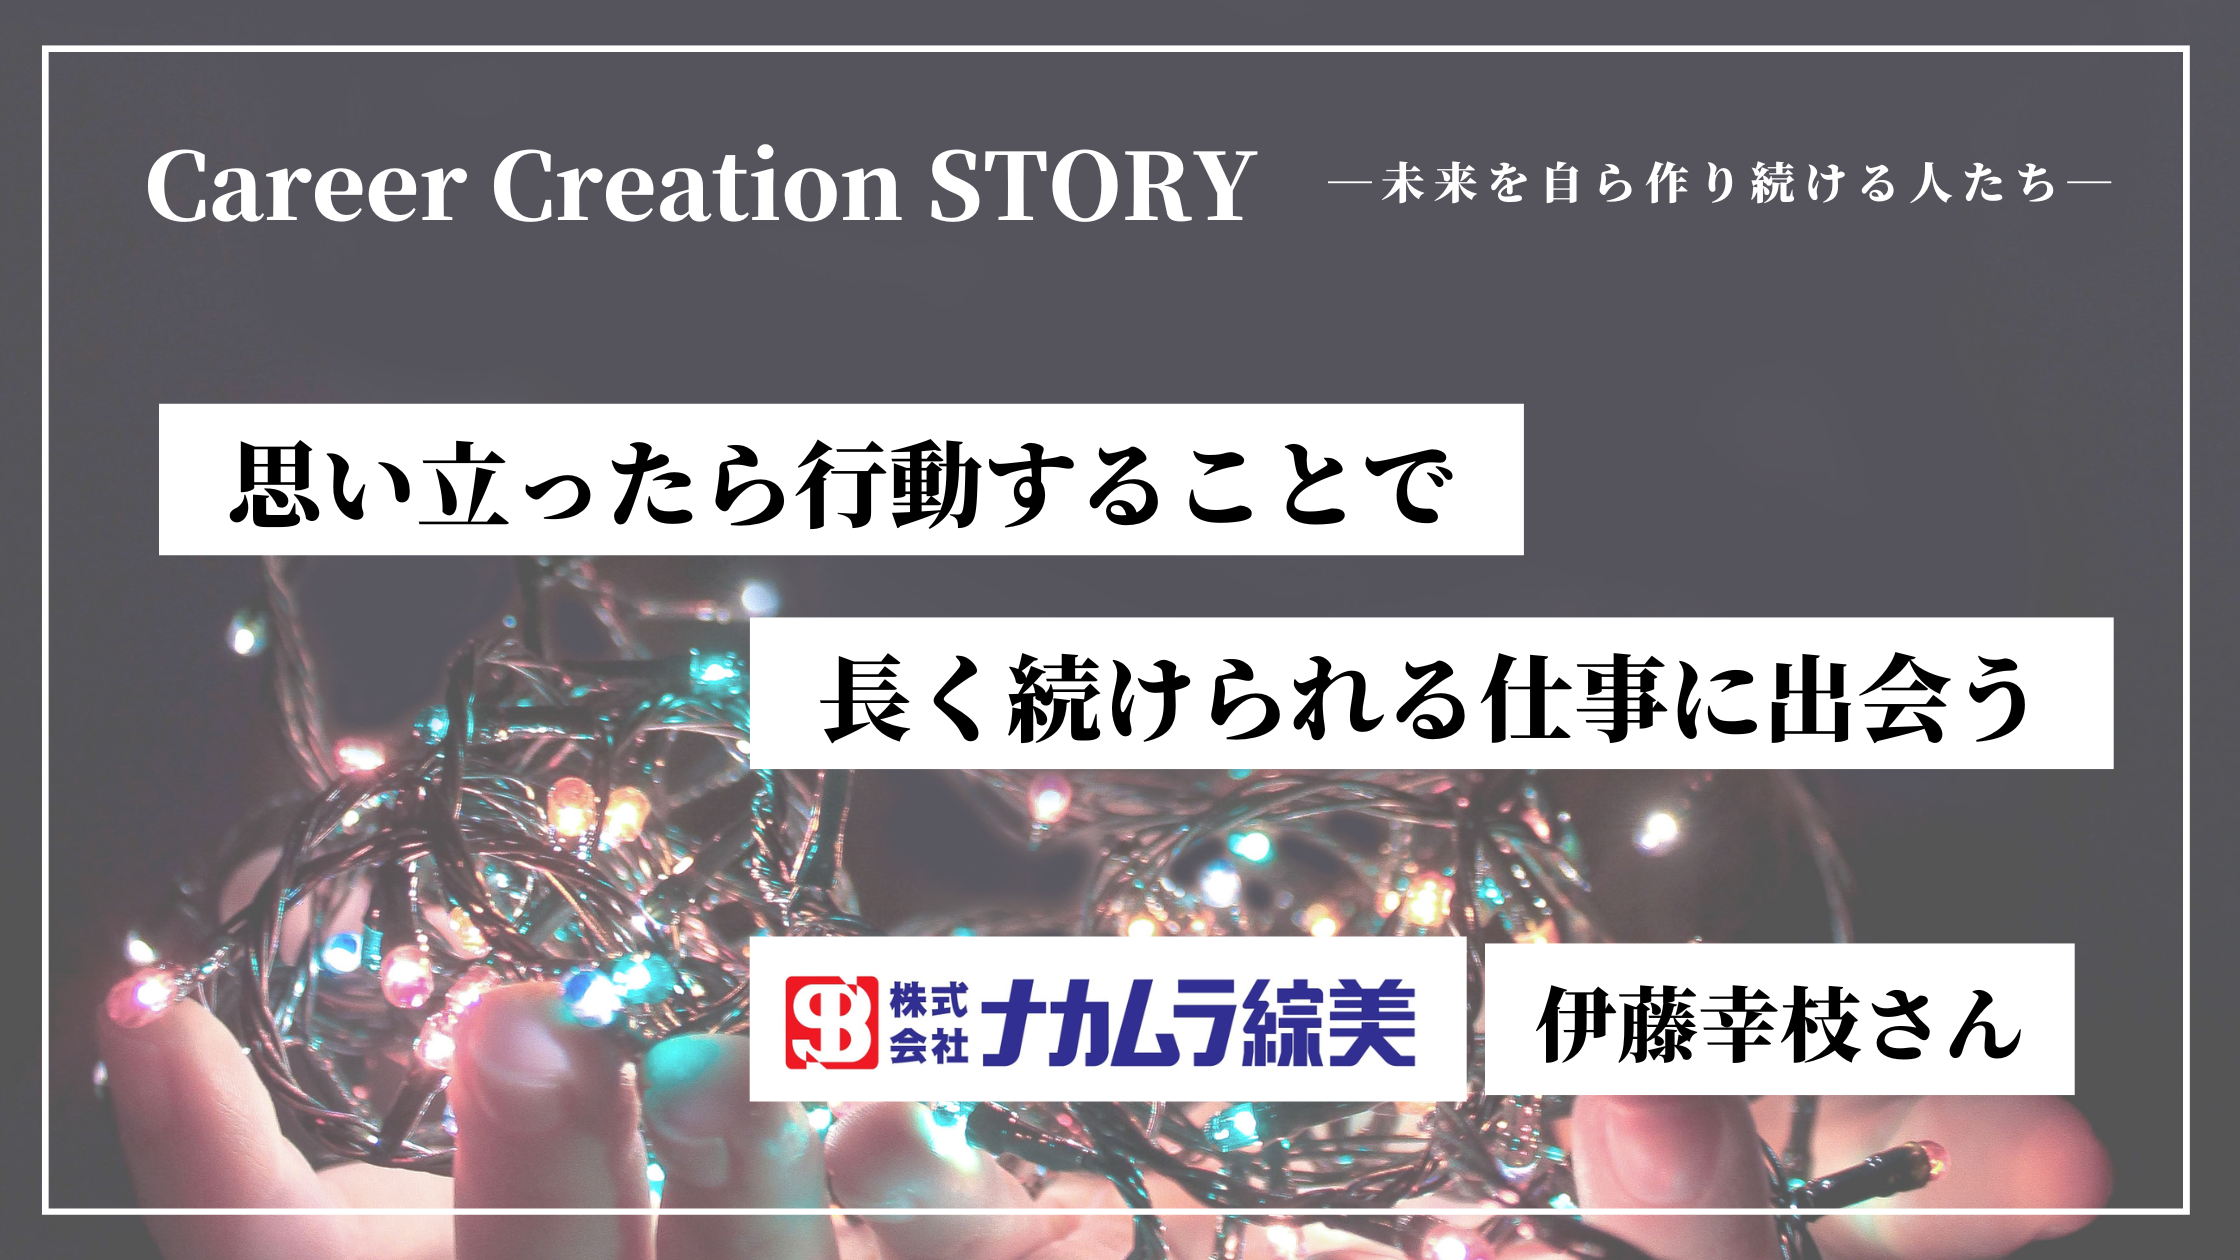 Career Creation STORY #3：（株）ネットプロテクションズ 渡辺悠太さん